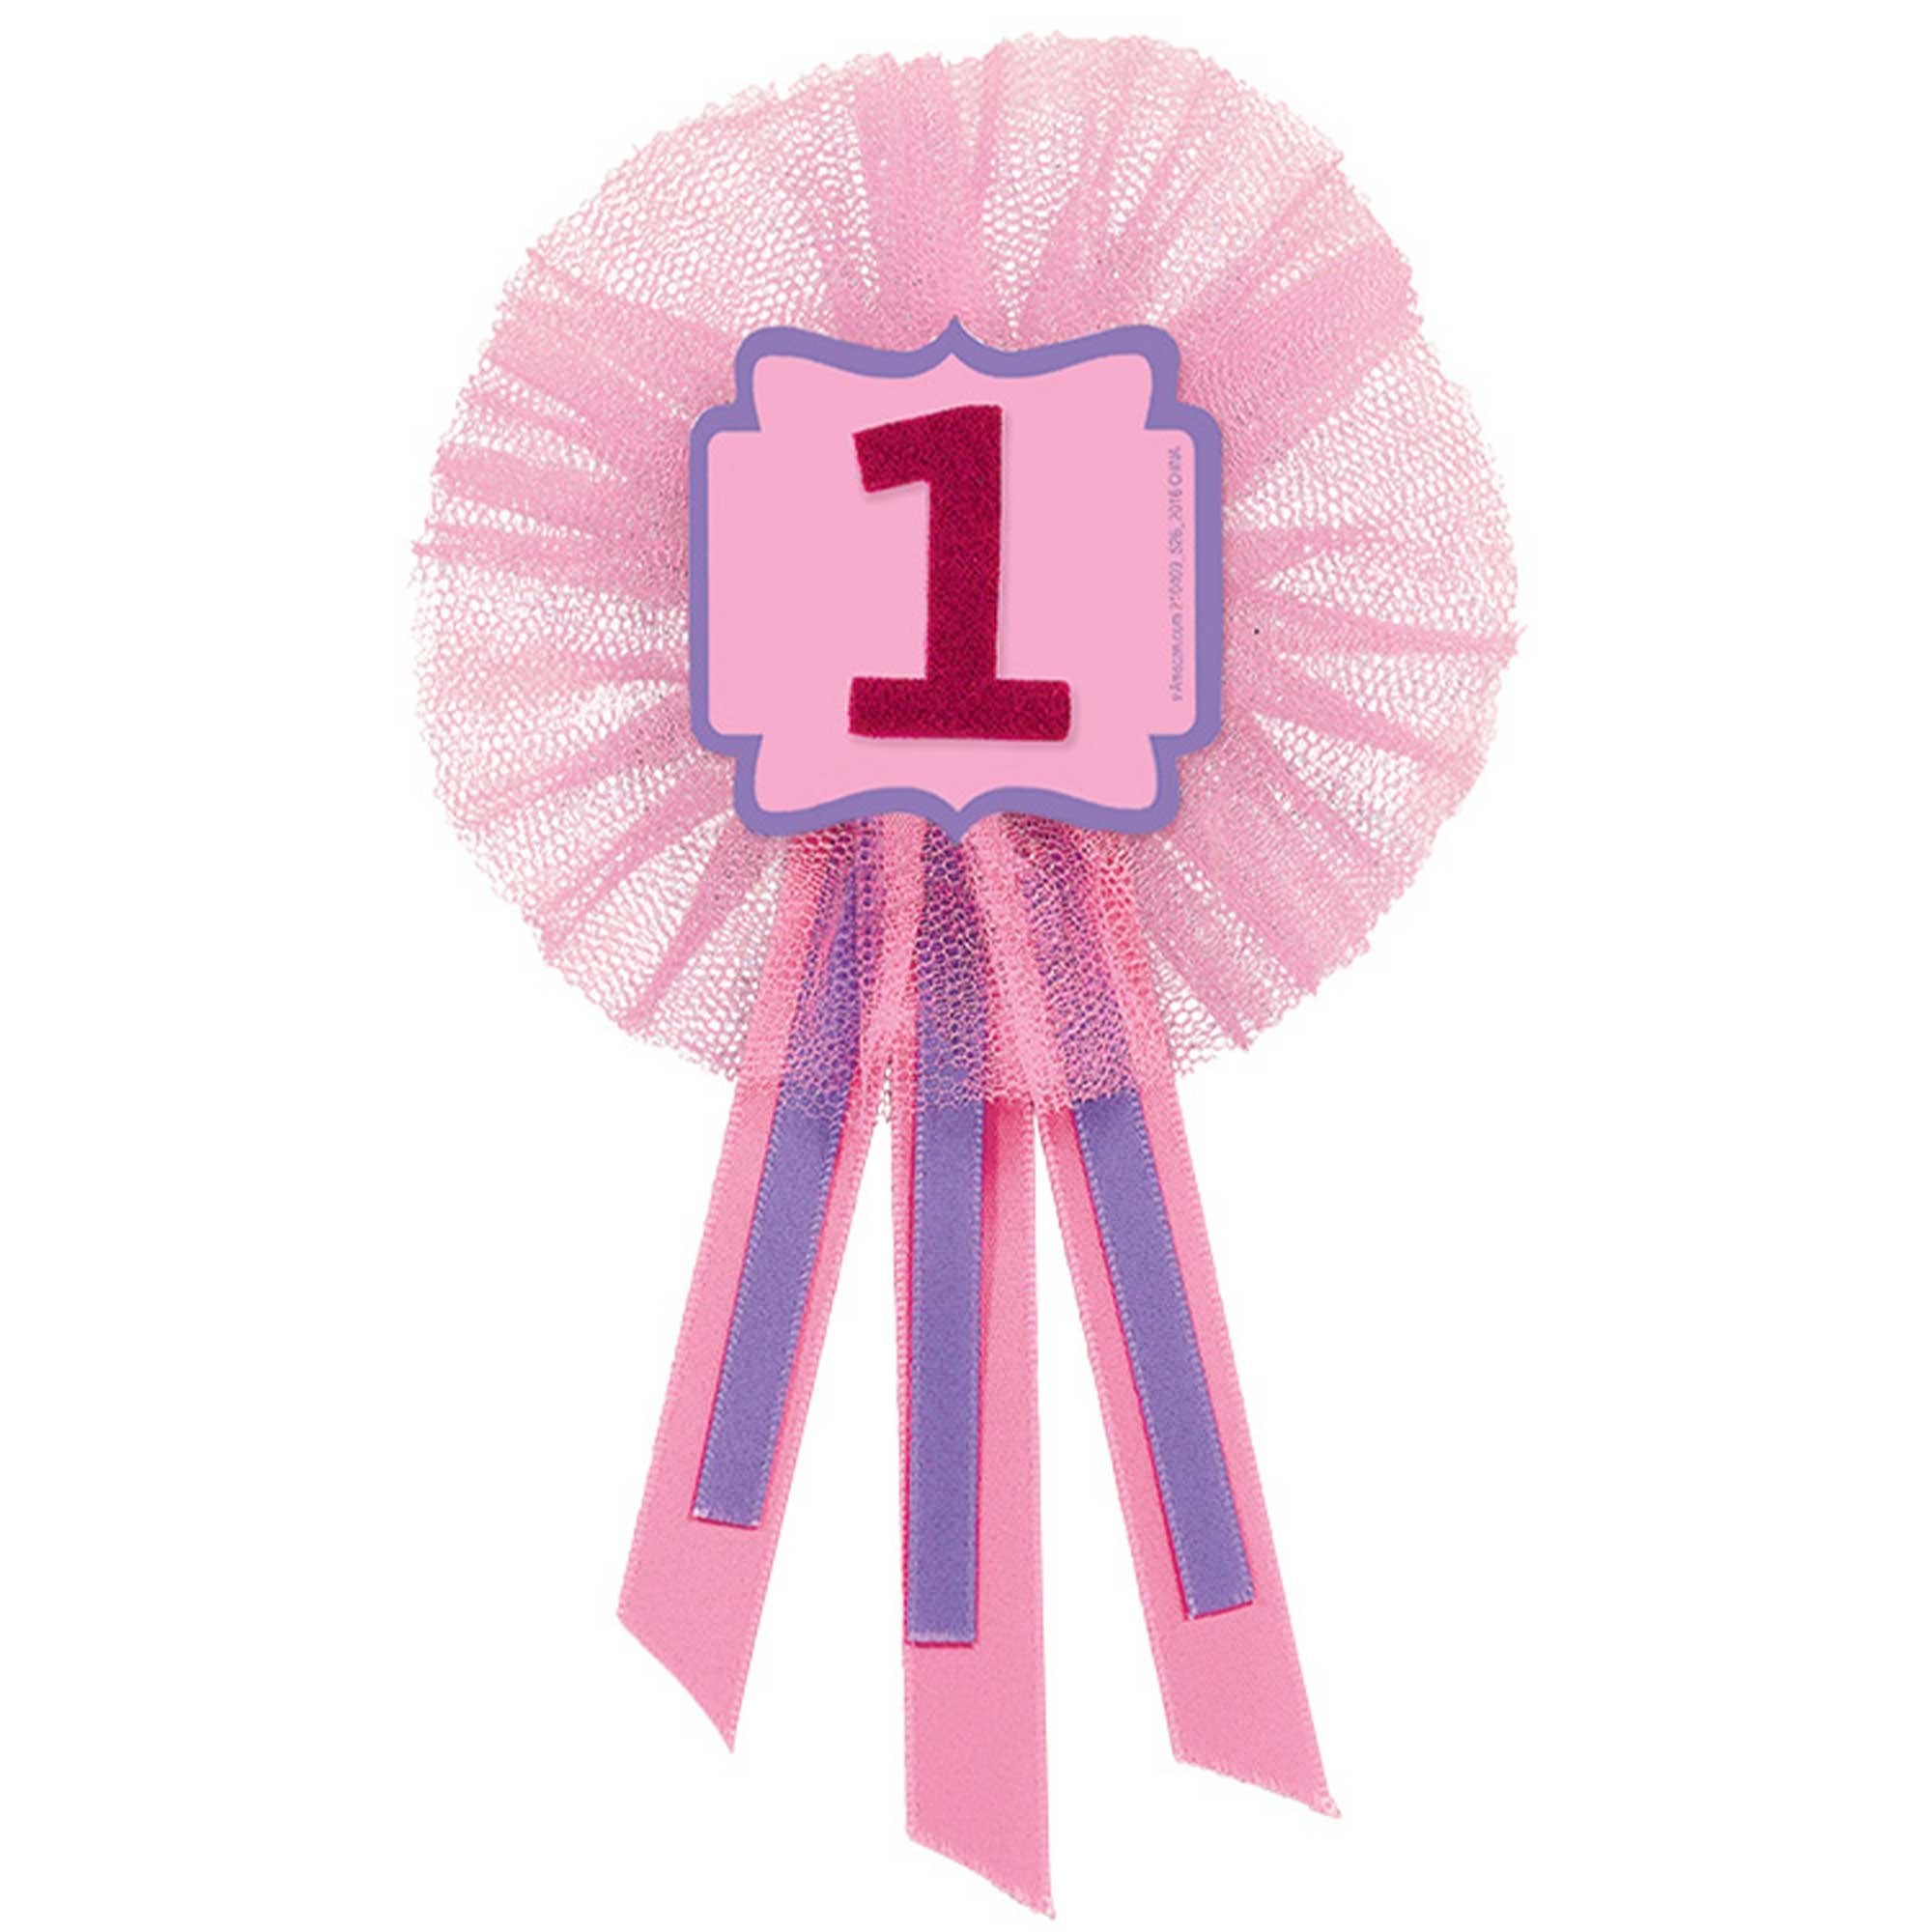 Badge Birthday Girl! Confetti 6cm